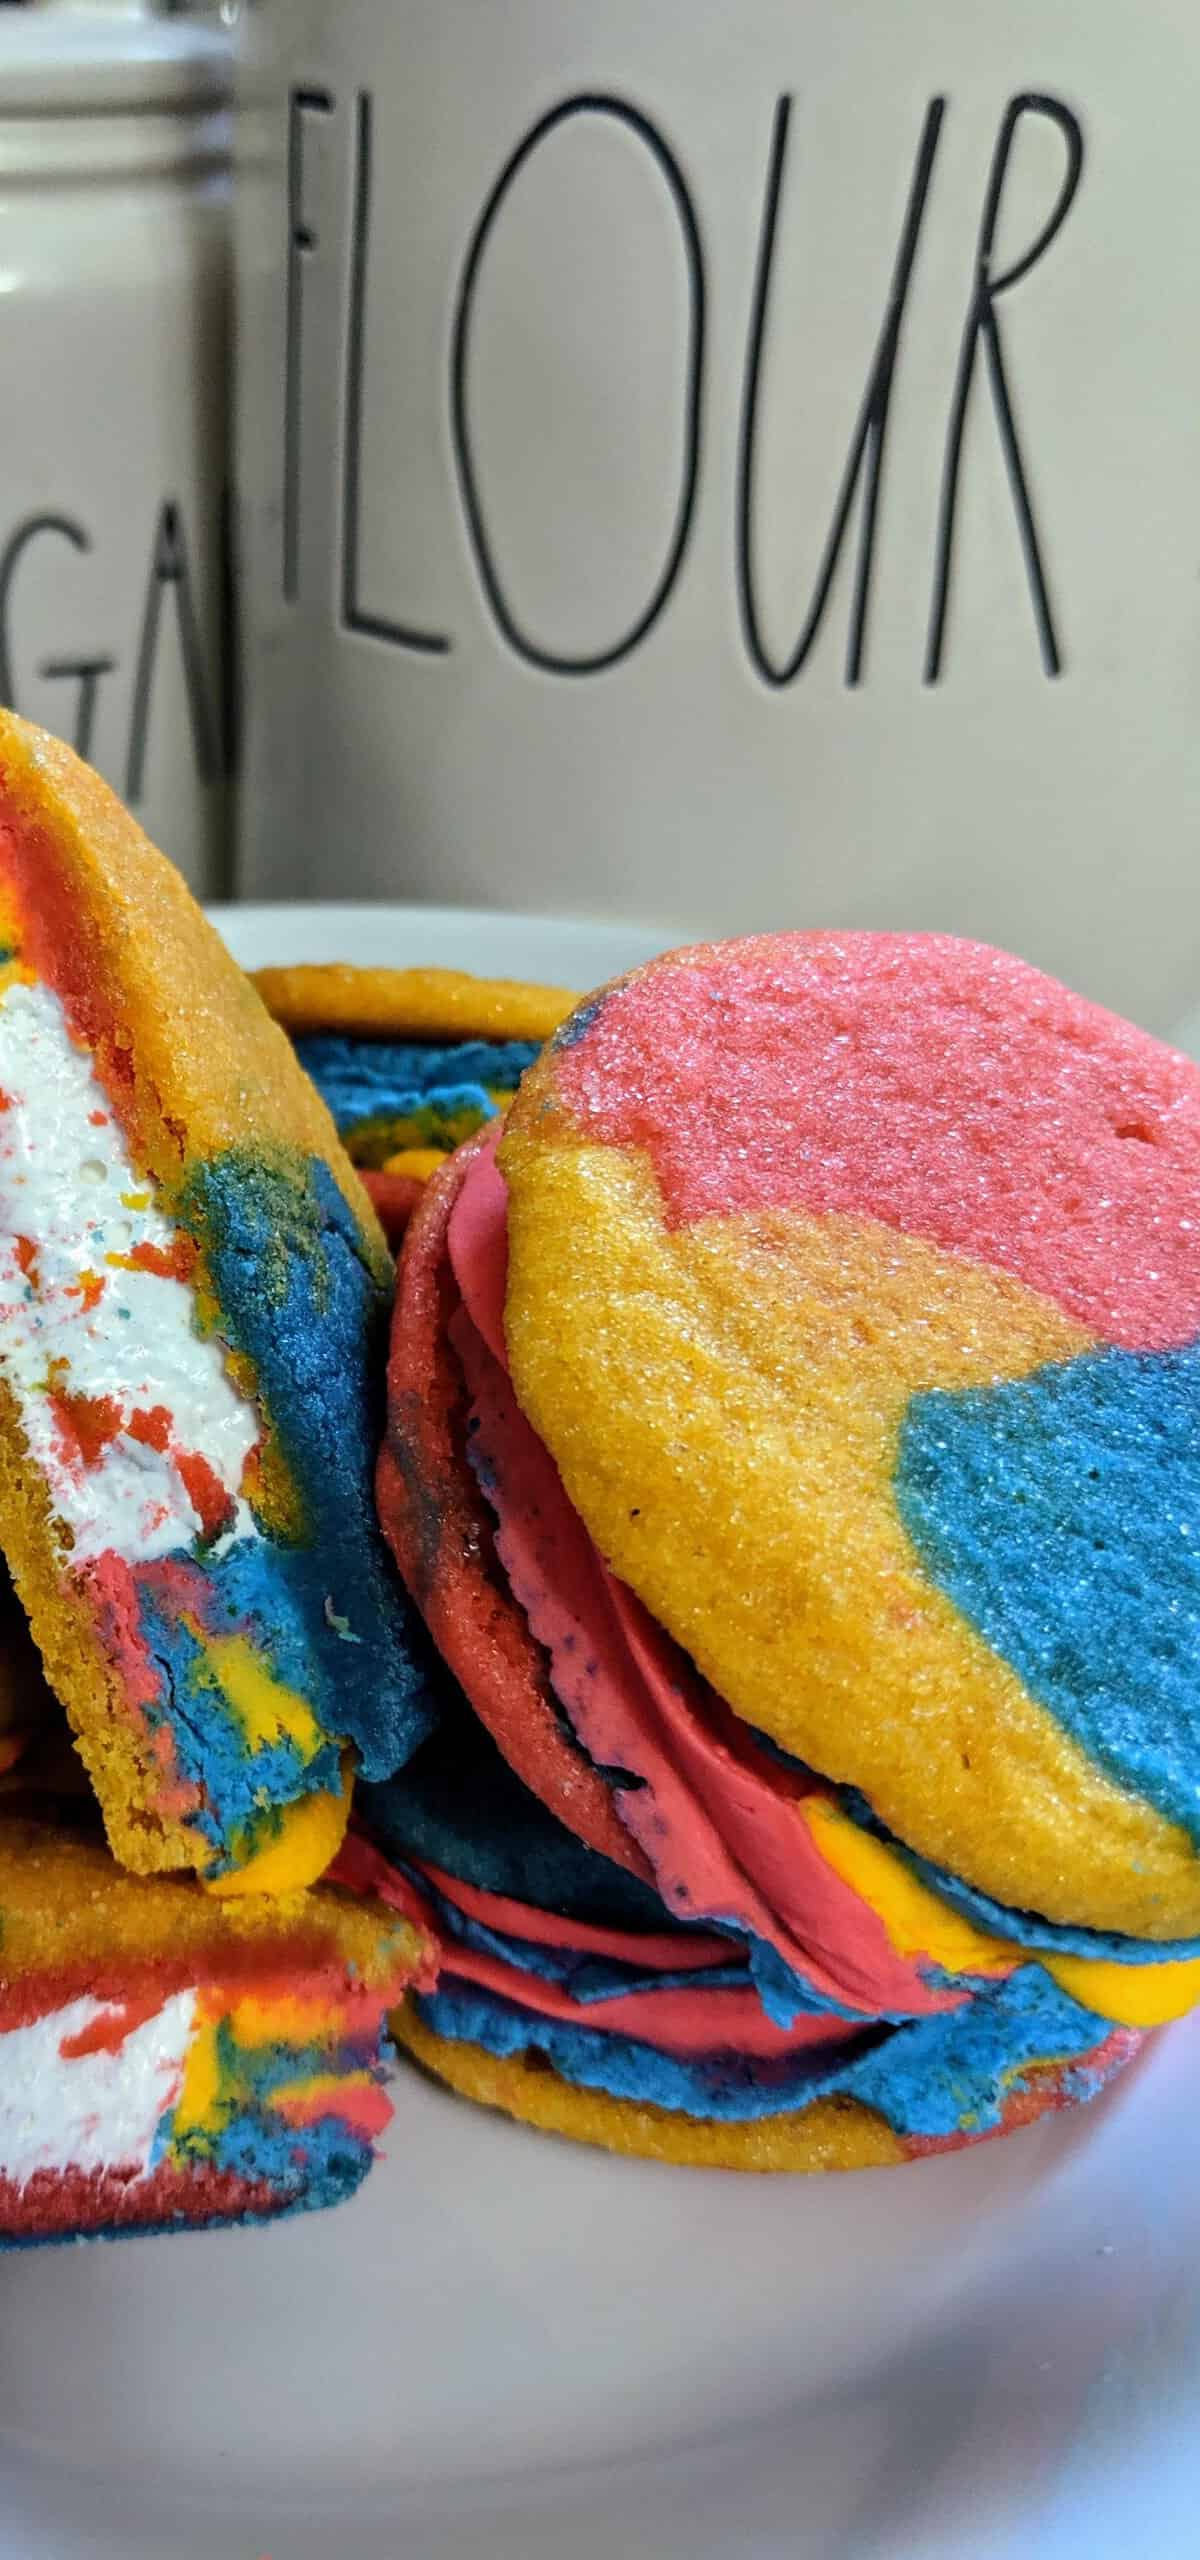 Delicious Superman Cookies Recipe – Bake Like A Superhero!